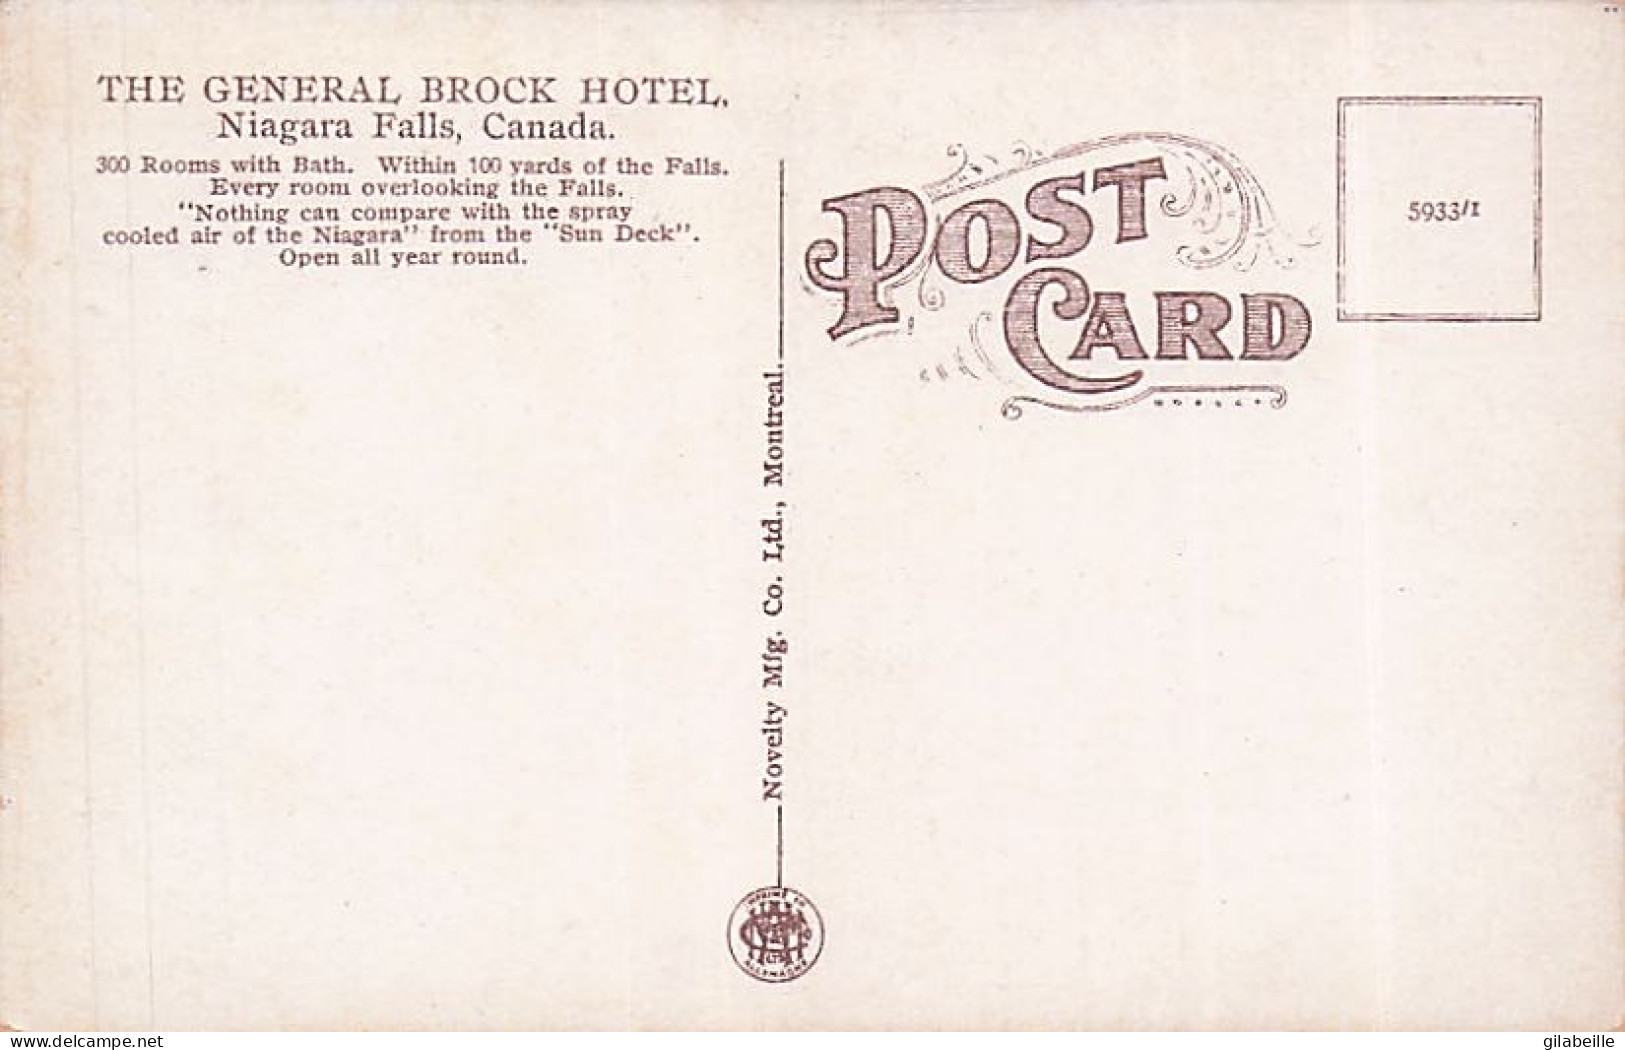 Canada - Niagara Falls - The General Brock Hotel " Sun Deck "  - Unclassified